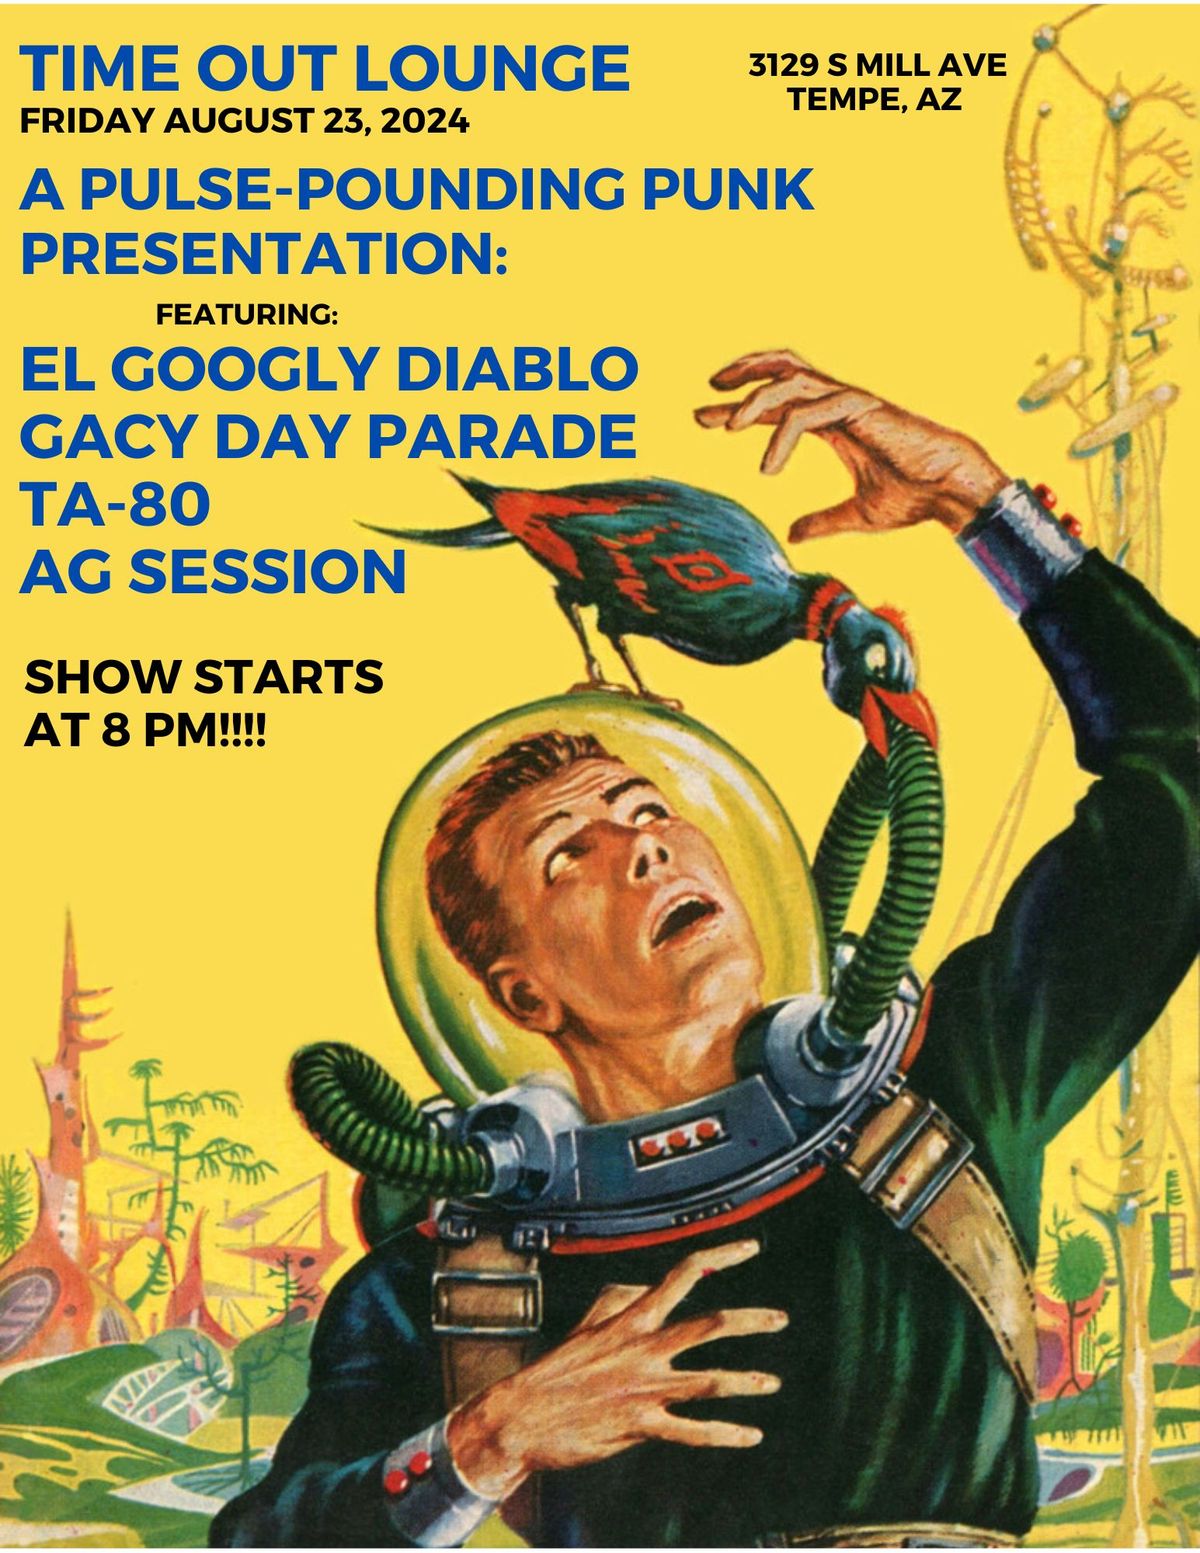 A Pulse-Pounding Punk Presentation!